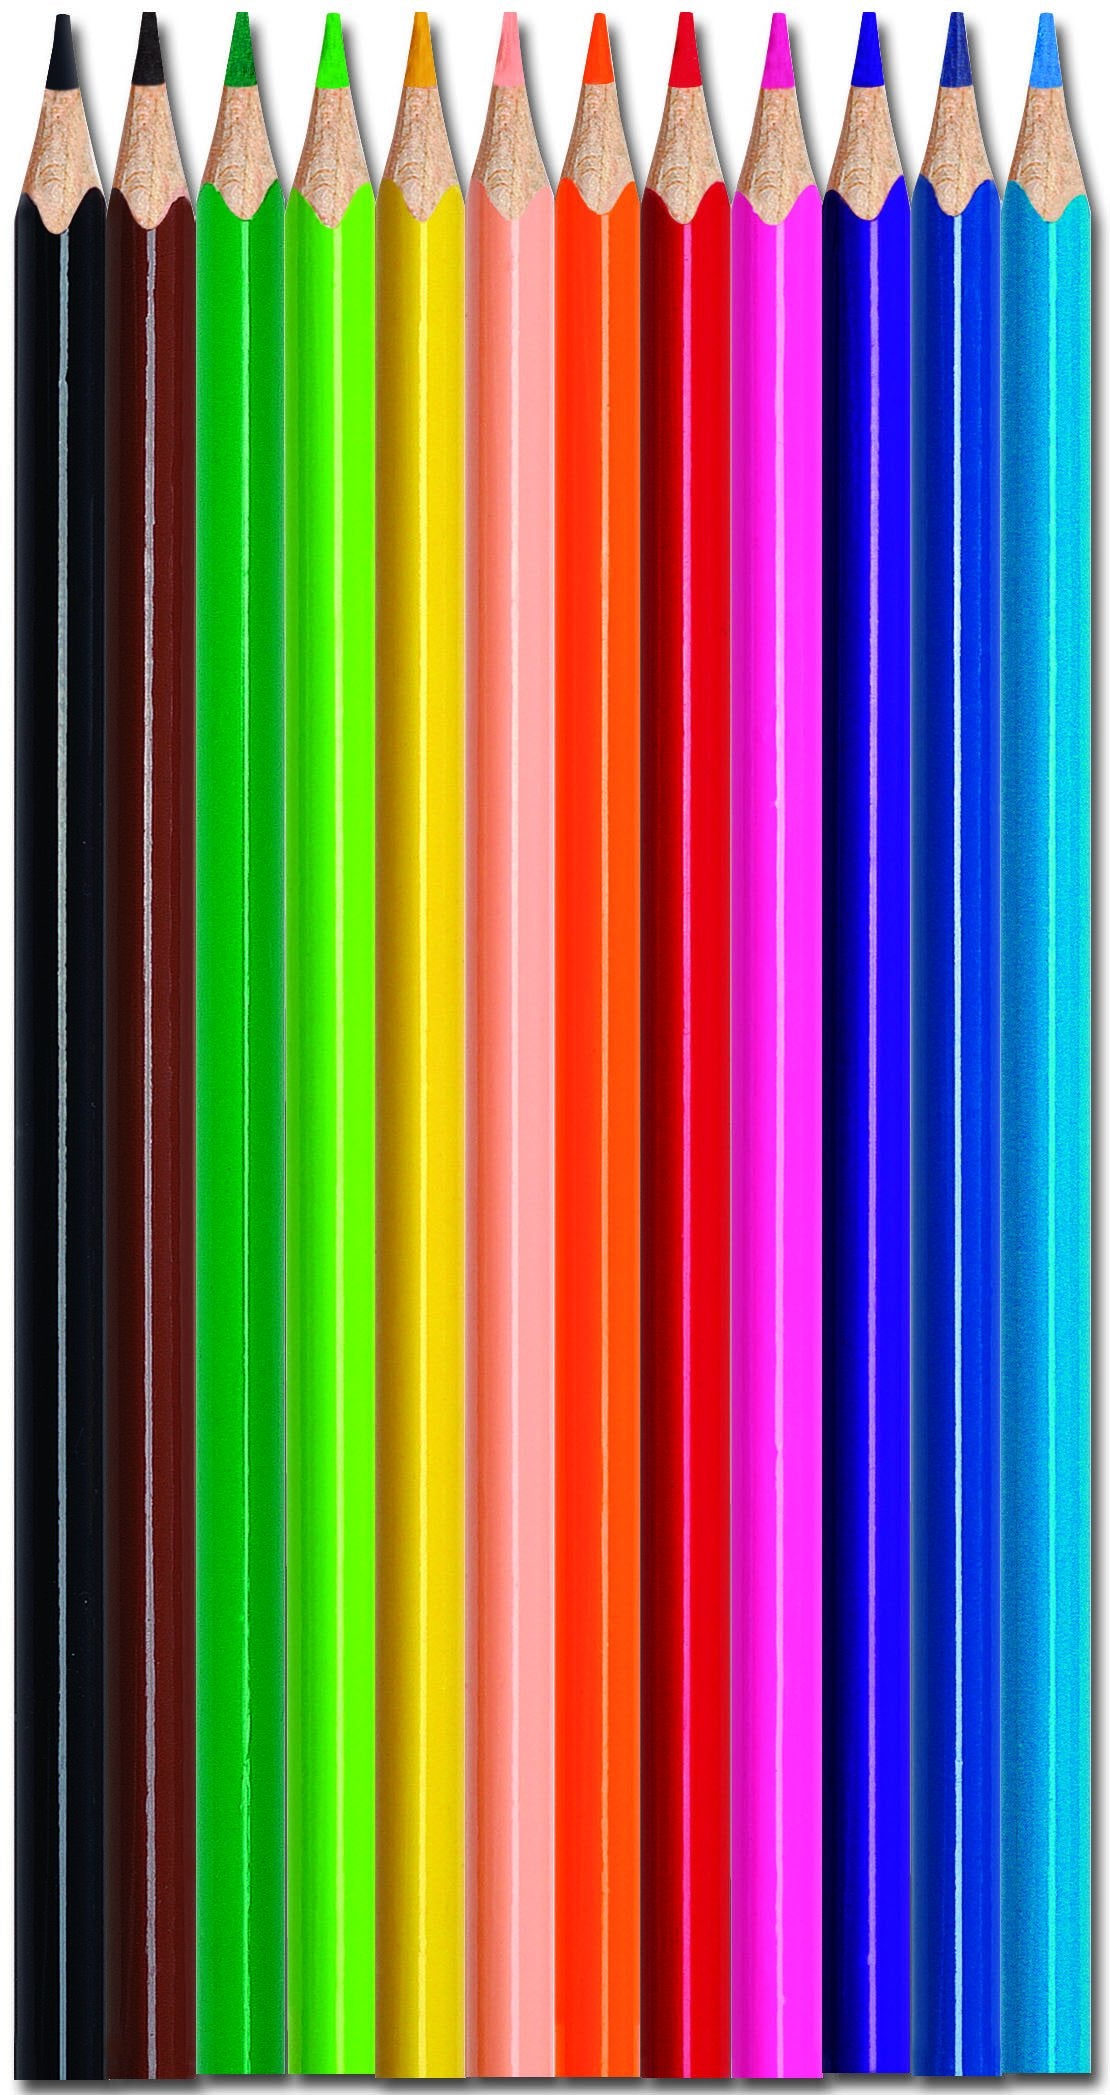 Maped Color'Peps Colouring Pencils (Pack Of 12) - Multi اقلام تلوين كولور بيبس من مابد (عبوة من 12 قطعة) - متعدد